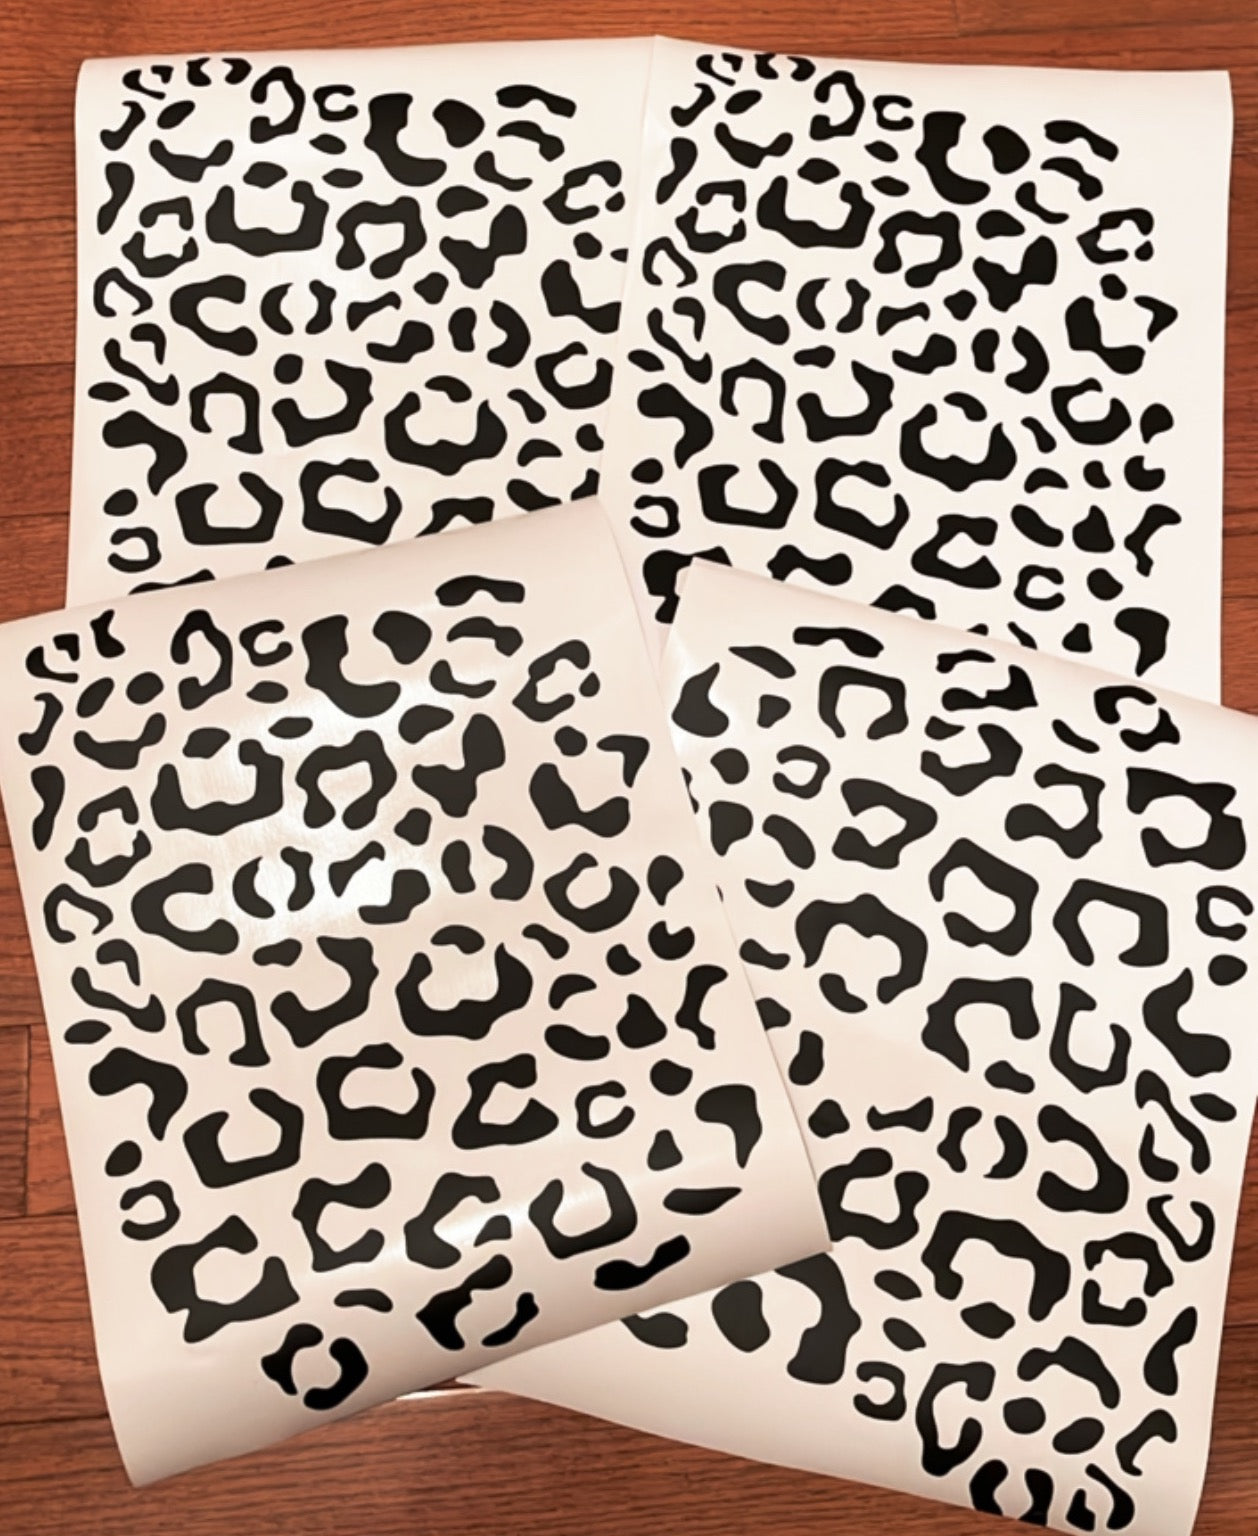 Cheetah/Leopard Animal Print Decal | Car Decal | Car Accessories | Versatile | Permanent Vinyl | Matte Black |You trim to fit